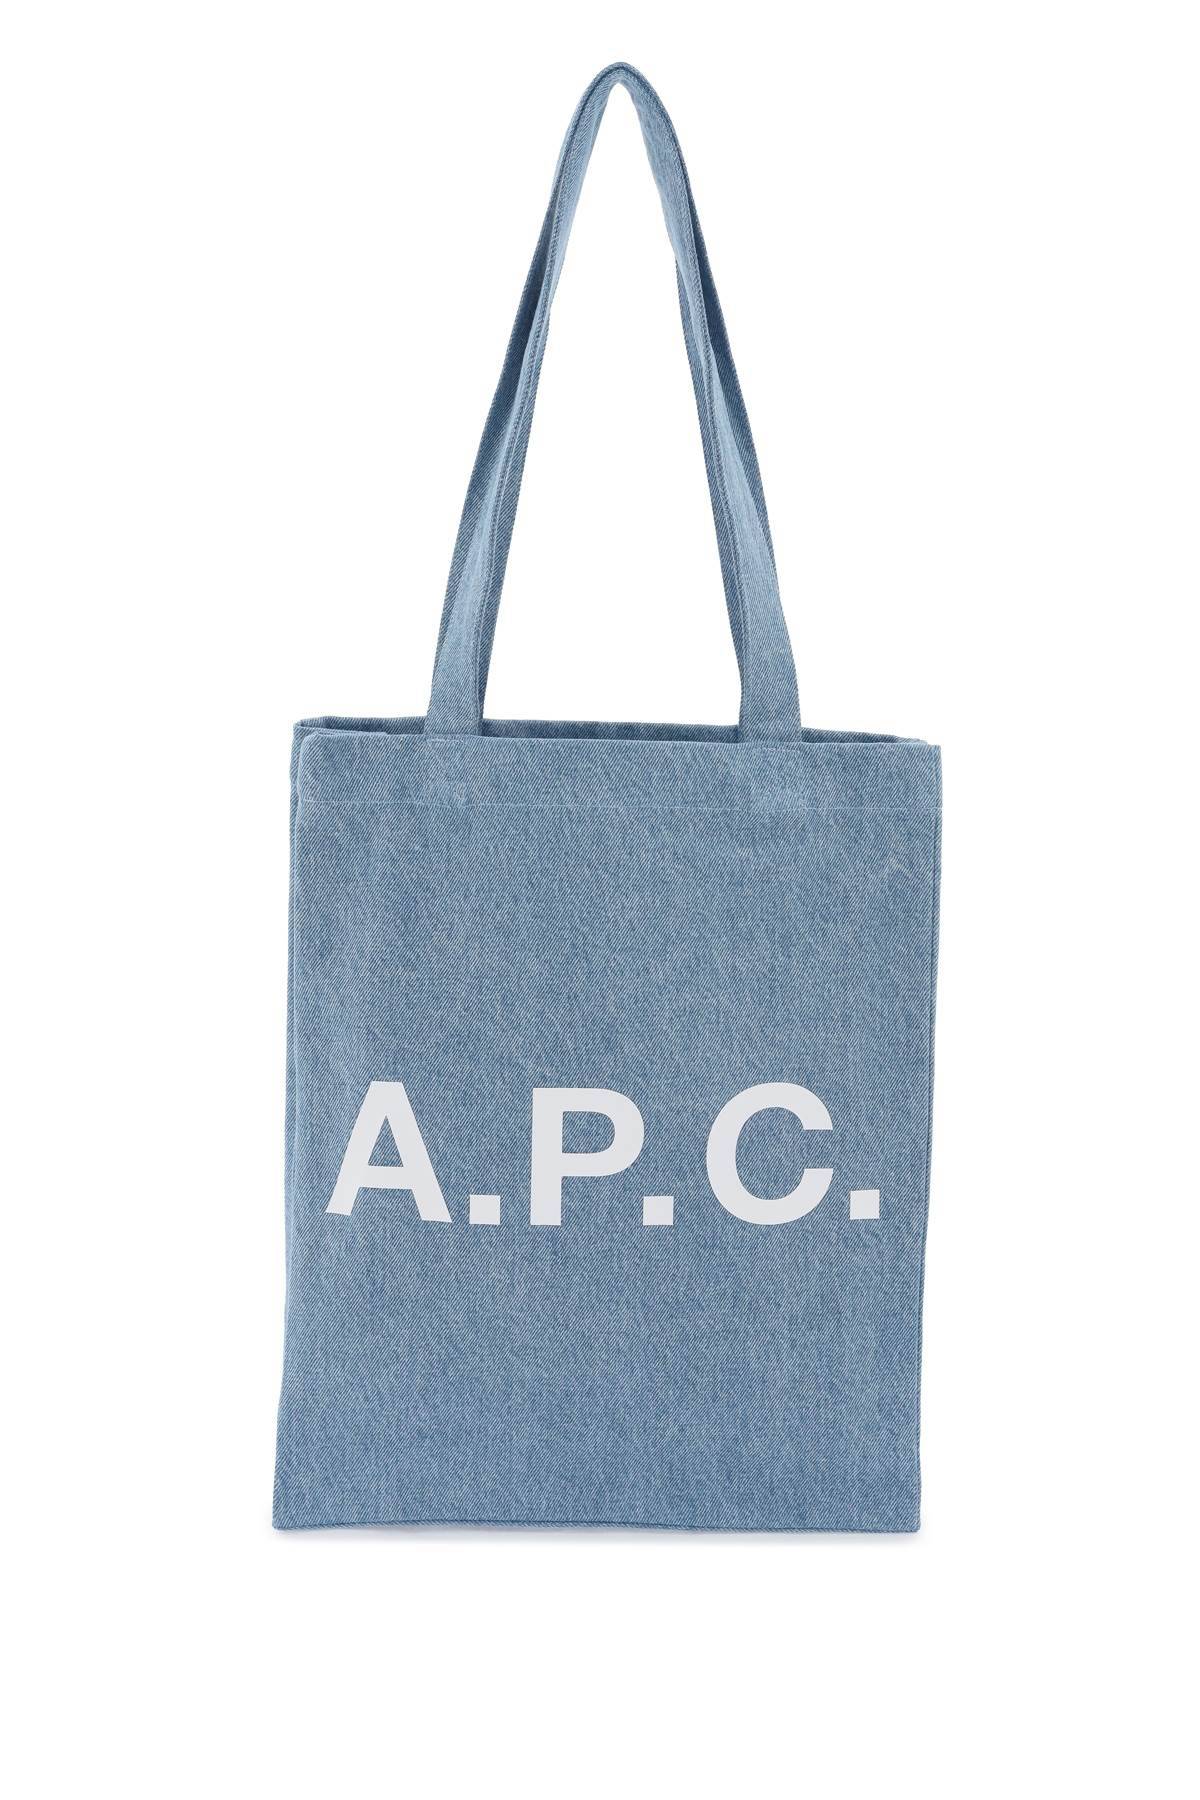 A.P.C. A. P.C. denim lou tote bag with